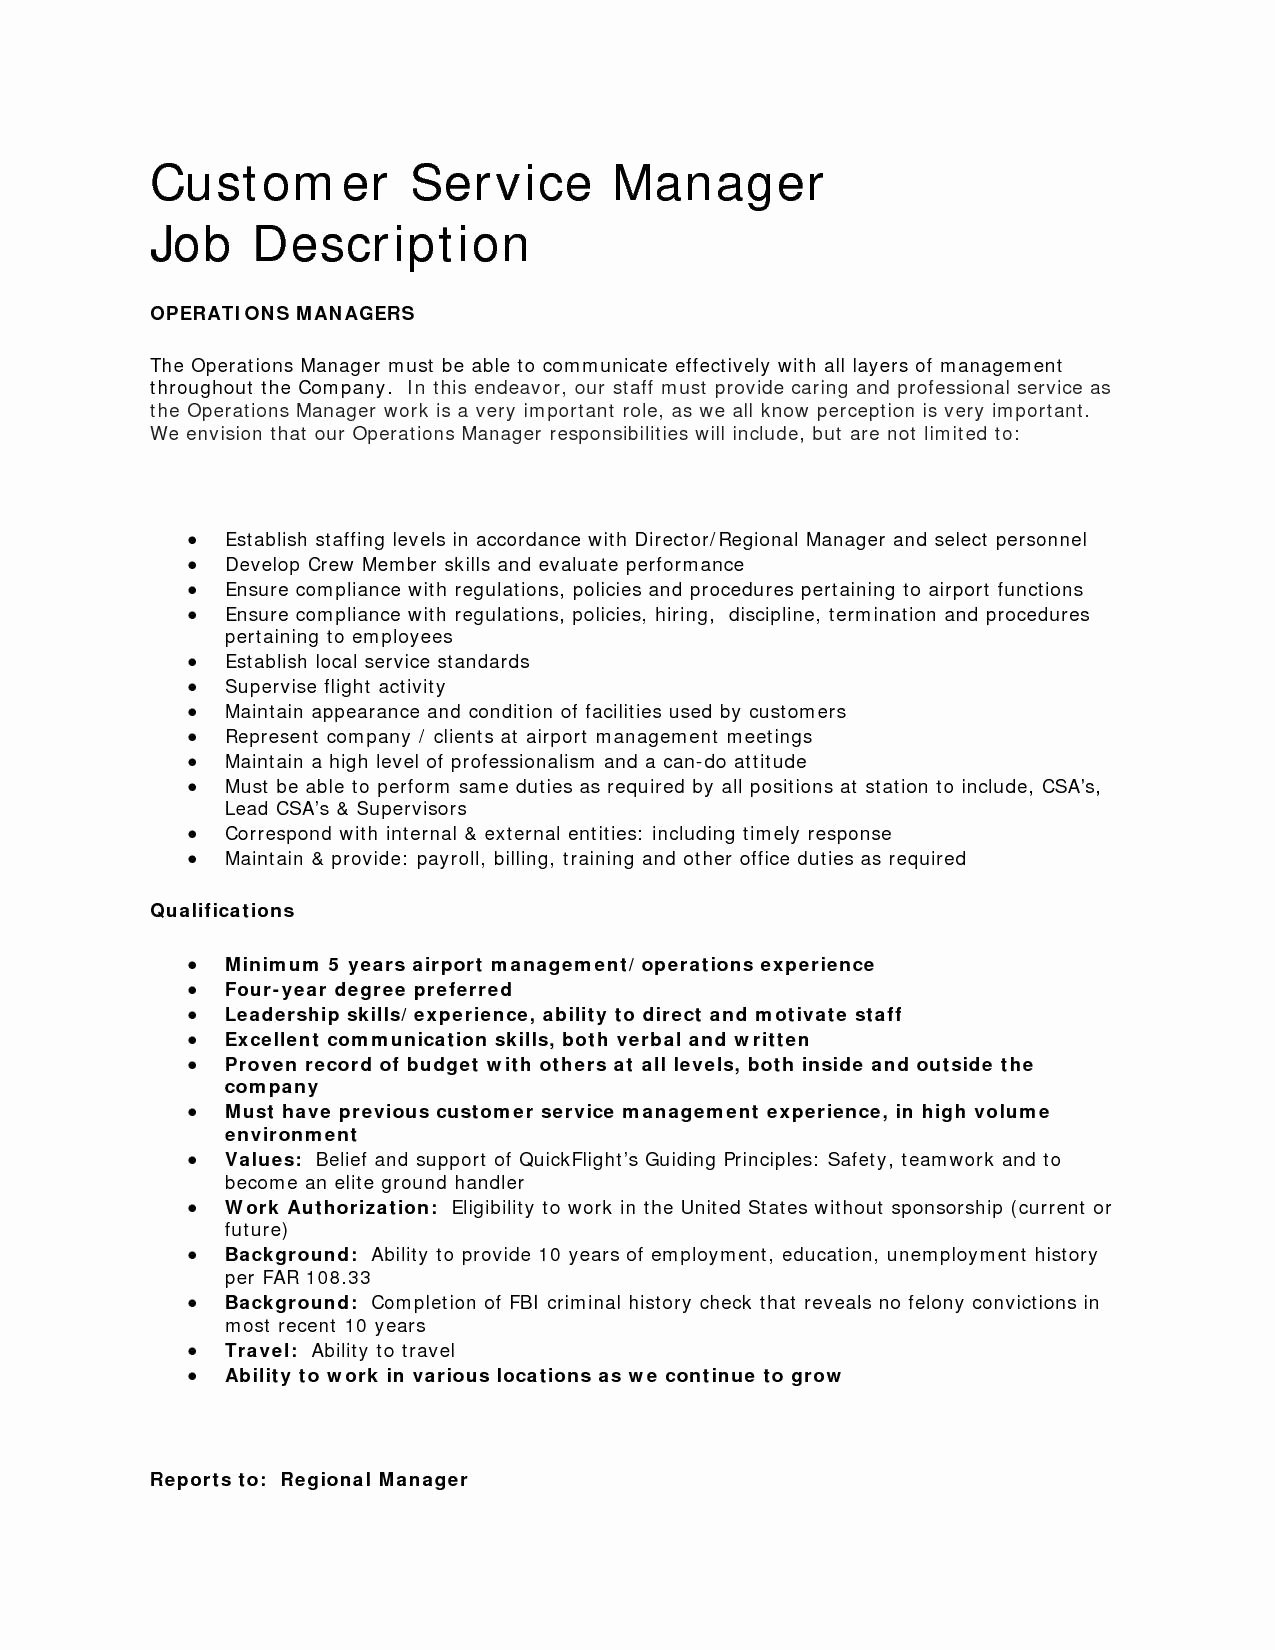 Resume Job Descriptions for Customer Service